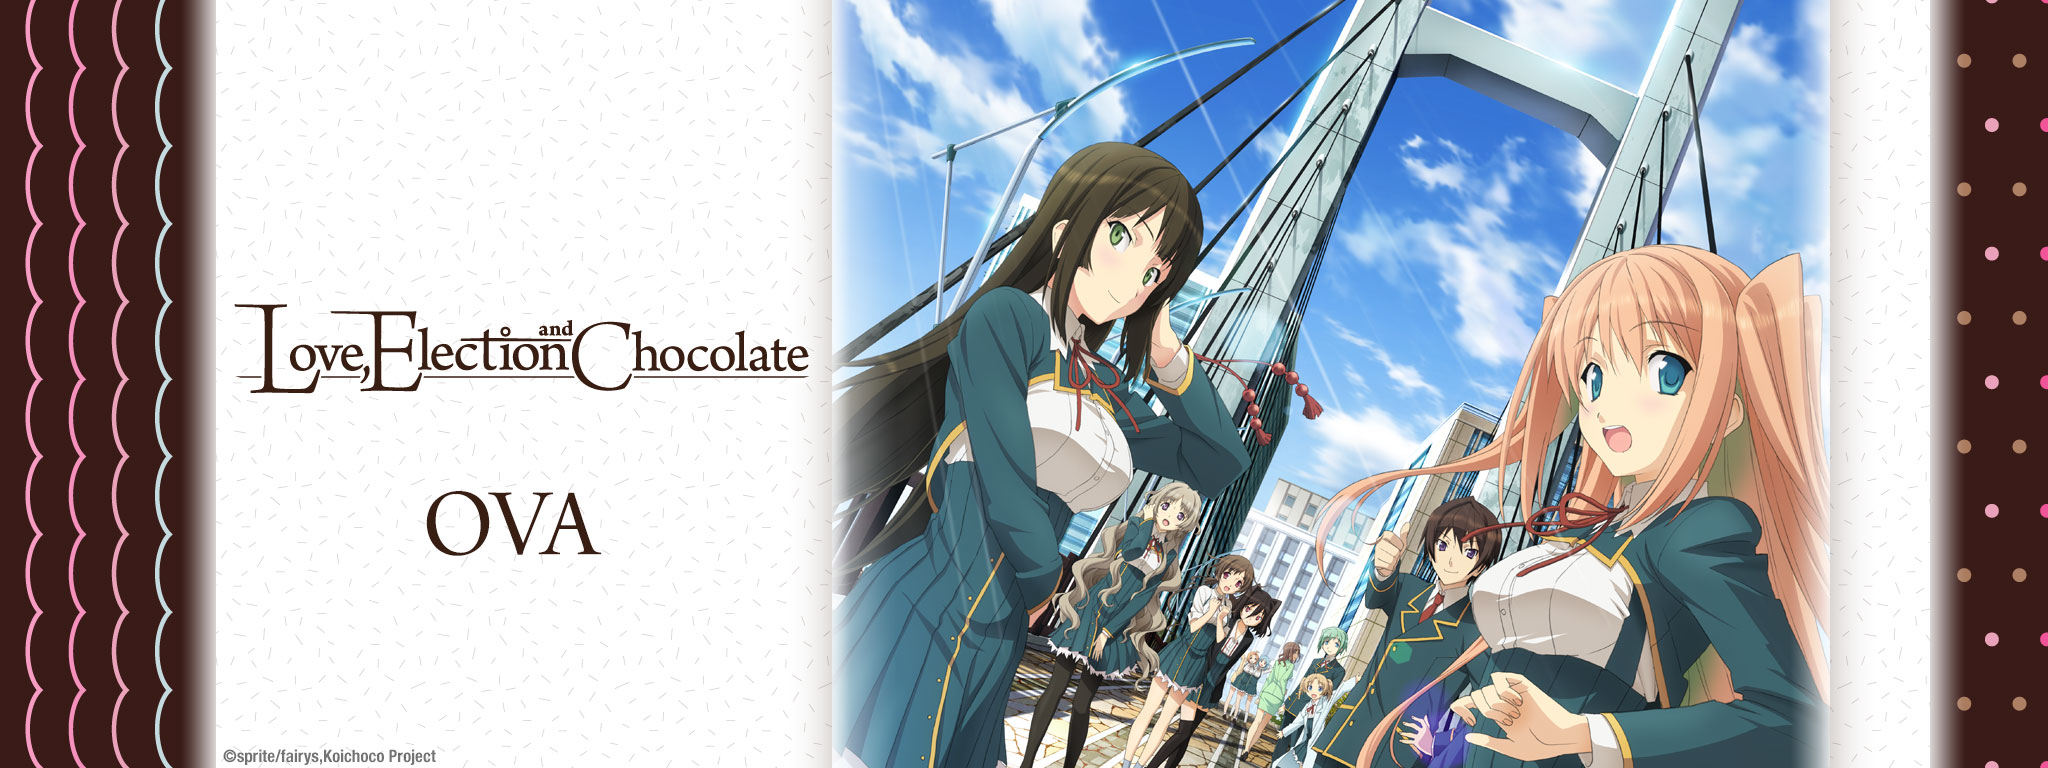 Title Art for Love, Election & Chocolate OVA